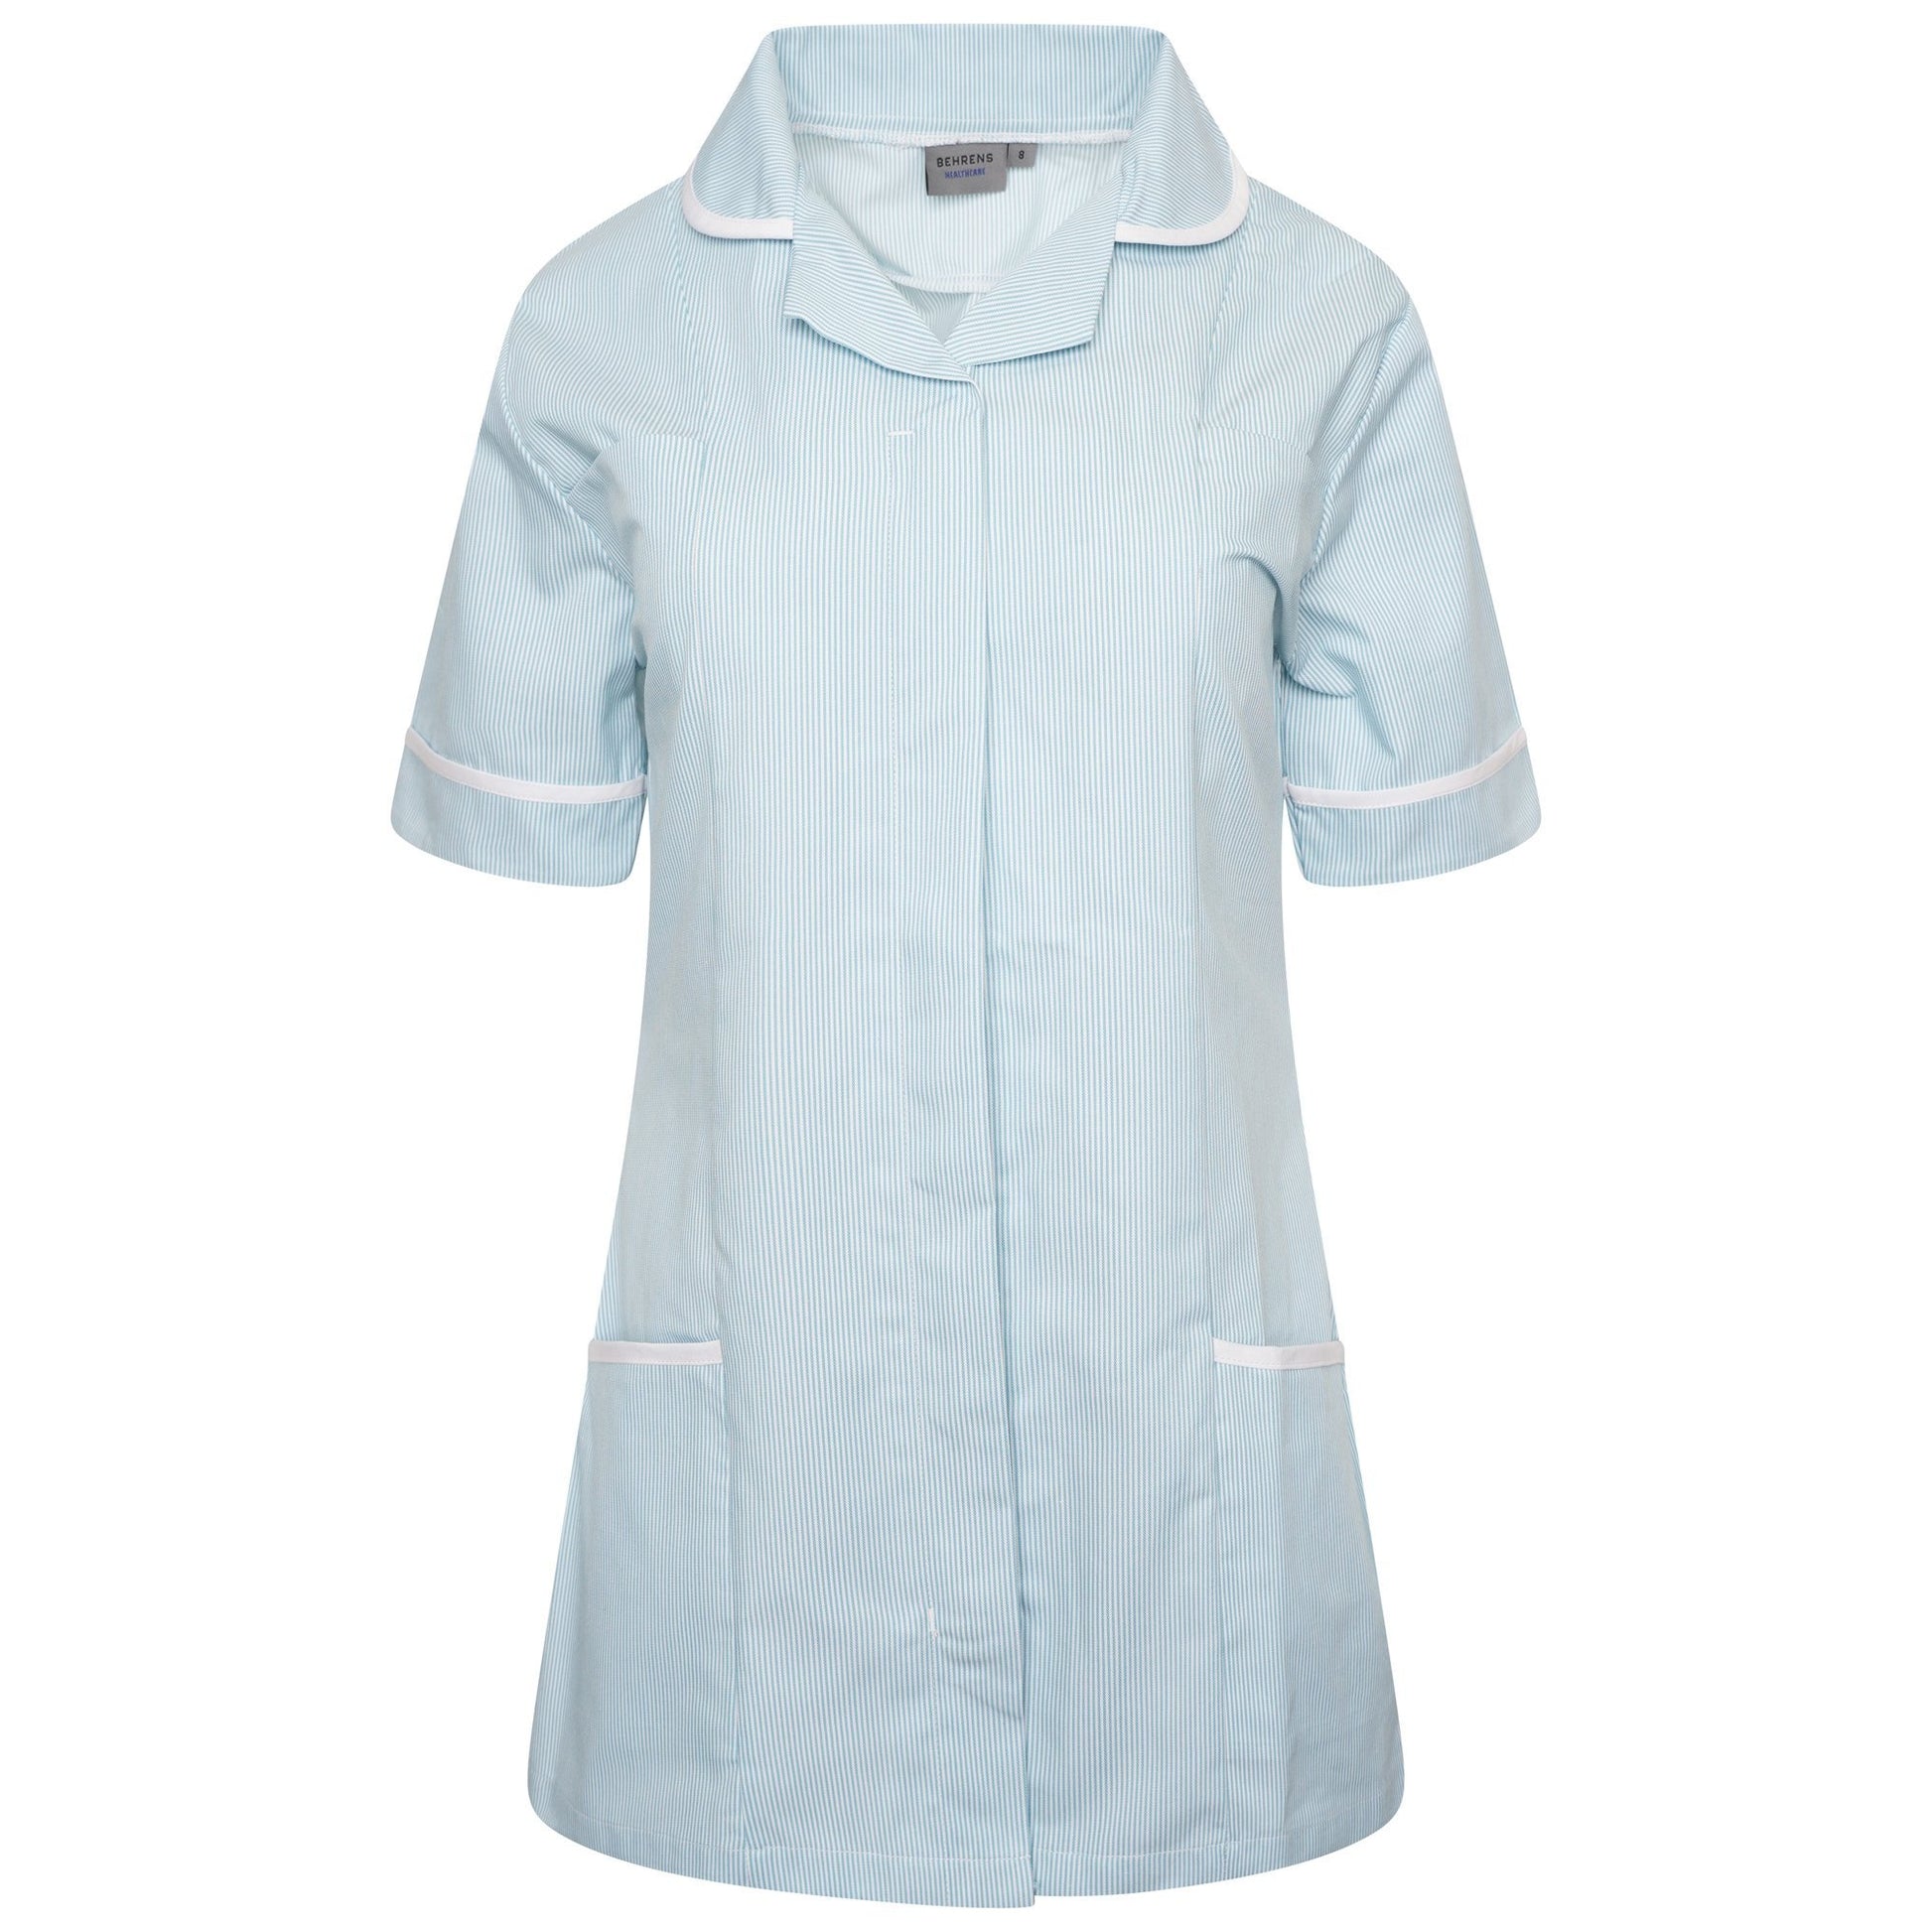 Behrens Striped Women's Healthcare Nurses Tunic - NCLTPS Green/White Stripe/White Trim UK 8